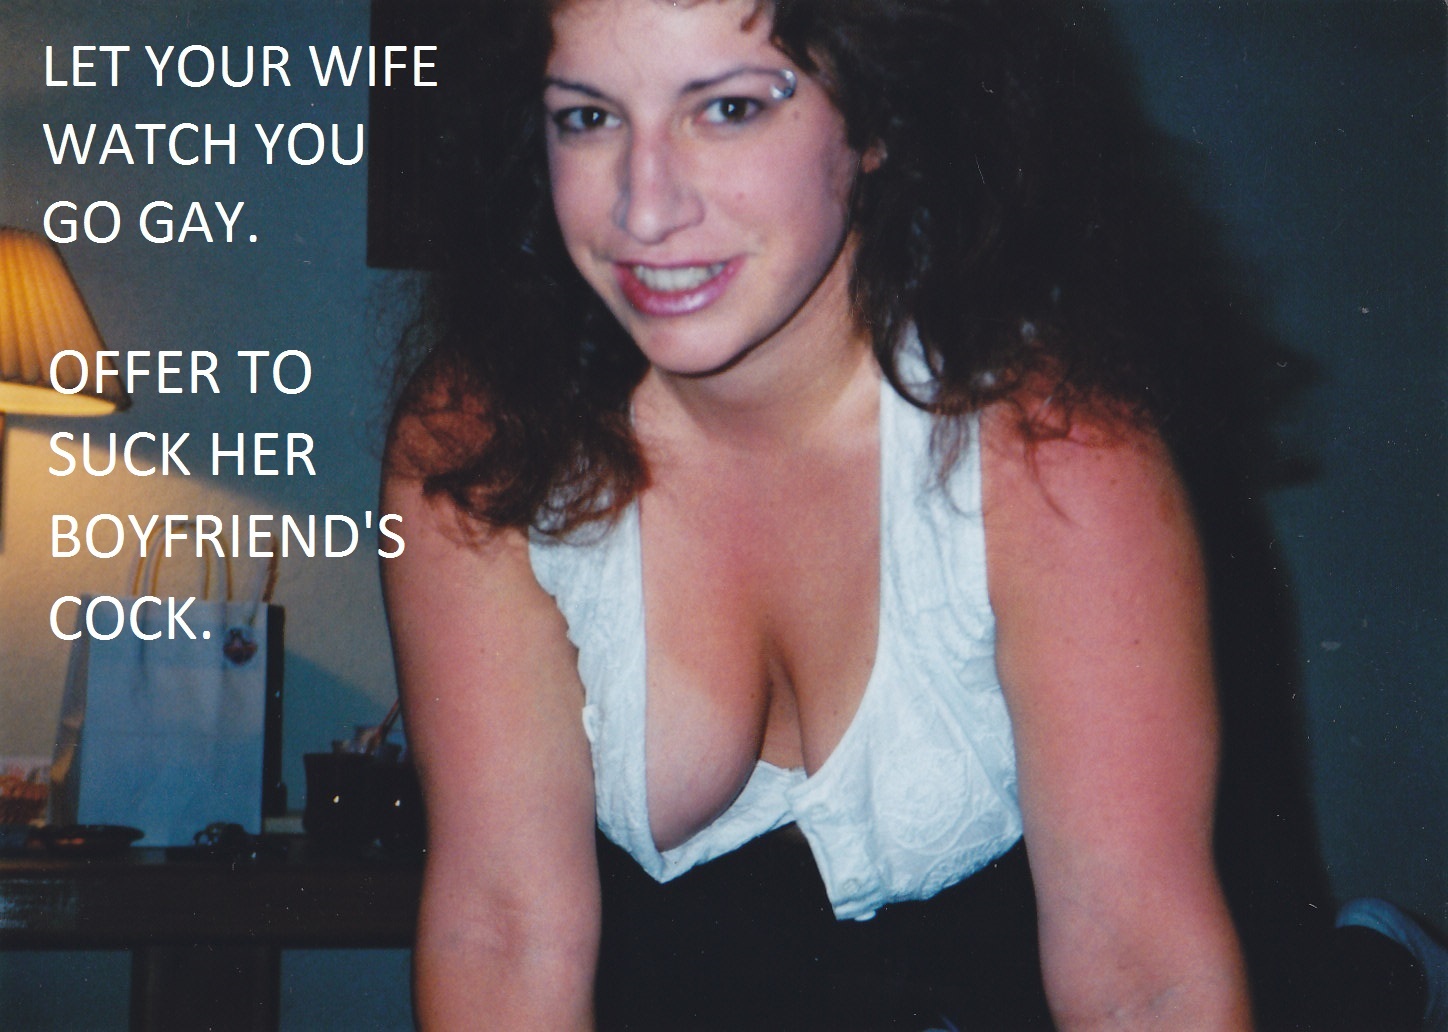 big tits downblouse free porn tube watch download Keep your slutwife happy   #slutwife  #hotwife  #unfaithful  #caption  #captions  #sexy  #tits  #brunette  #forcedbi  #bihusband  #humiliated  #wife